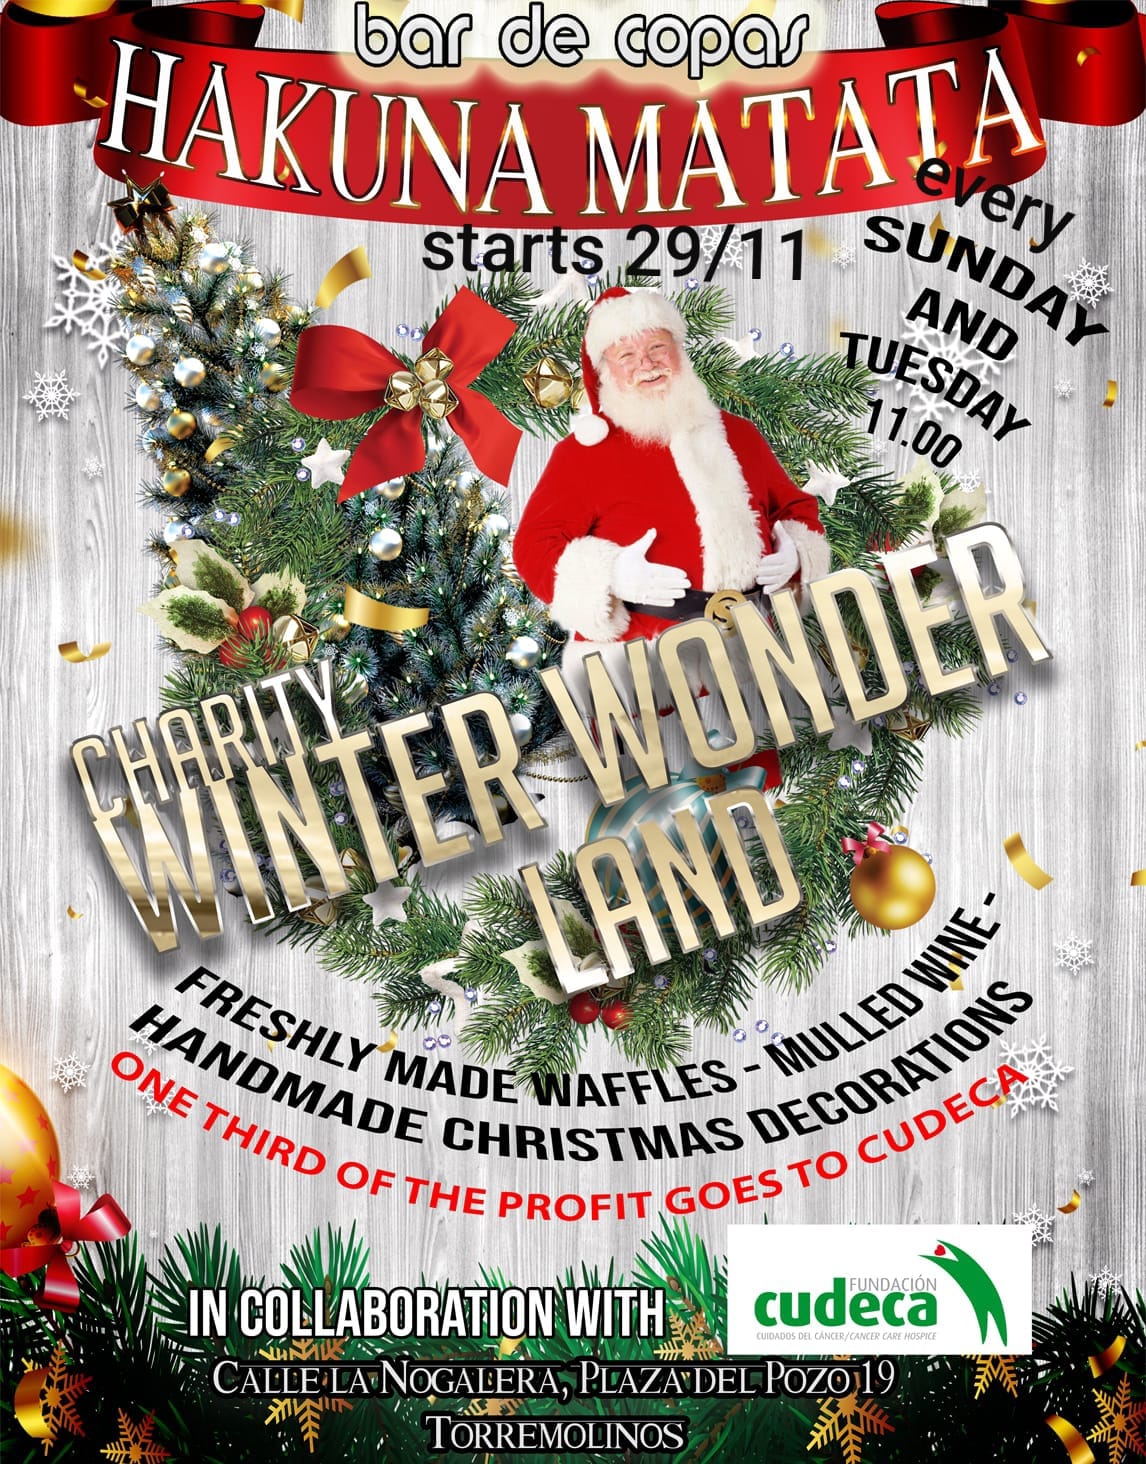 Charity Winter Wonderland at Hakuna Matata Bar